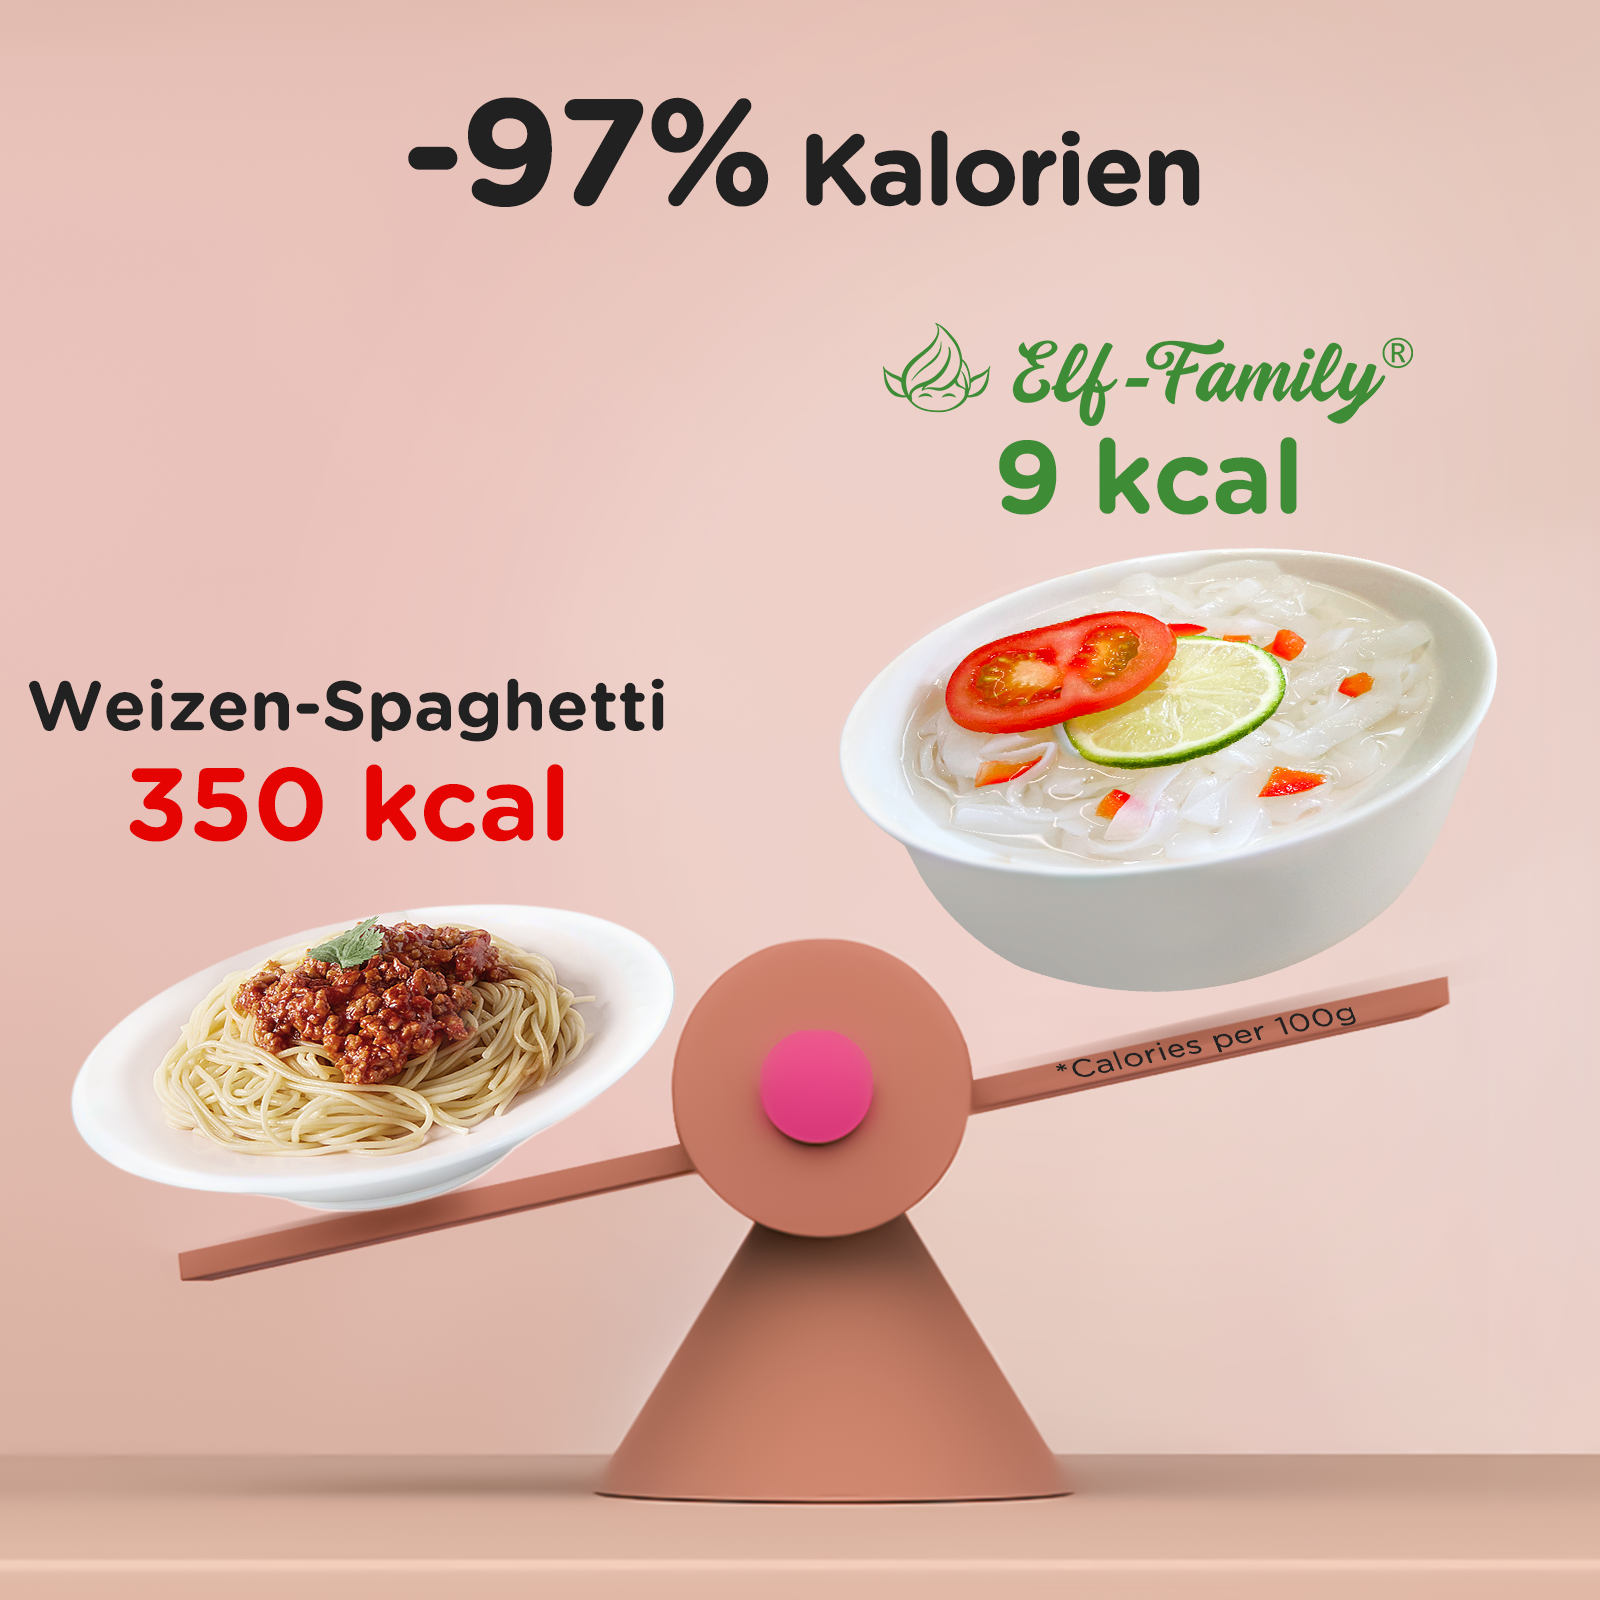 Elf-Family XXXL Gastro-Packung 1.34kg Shirataki Nudeln für Restaurants – Solo 9kcal, Low Carb, Instant, Familienpackung Konjak Nudeln, Keto, Kalorienarm, Vegan, Glutenfrei -Fettuccine 